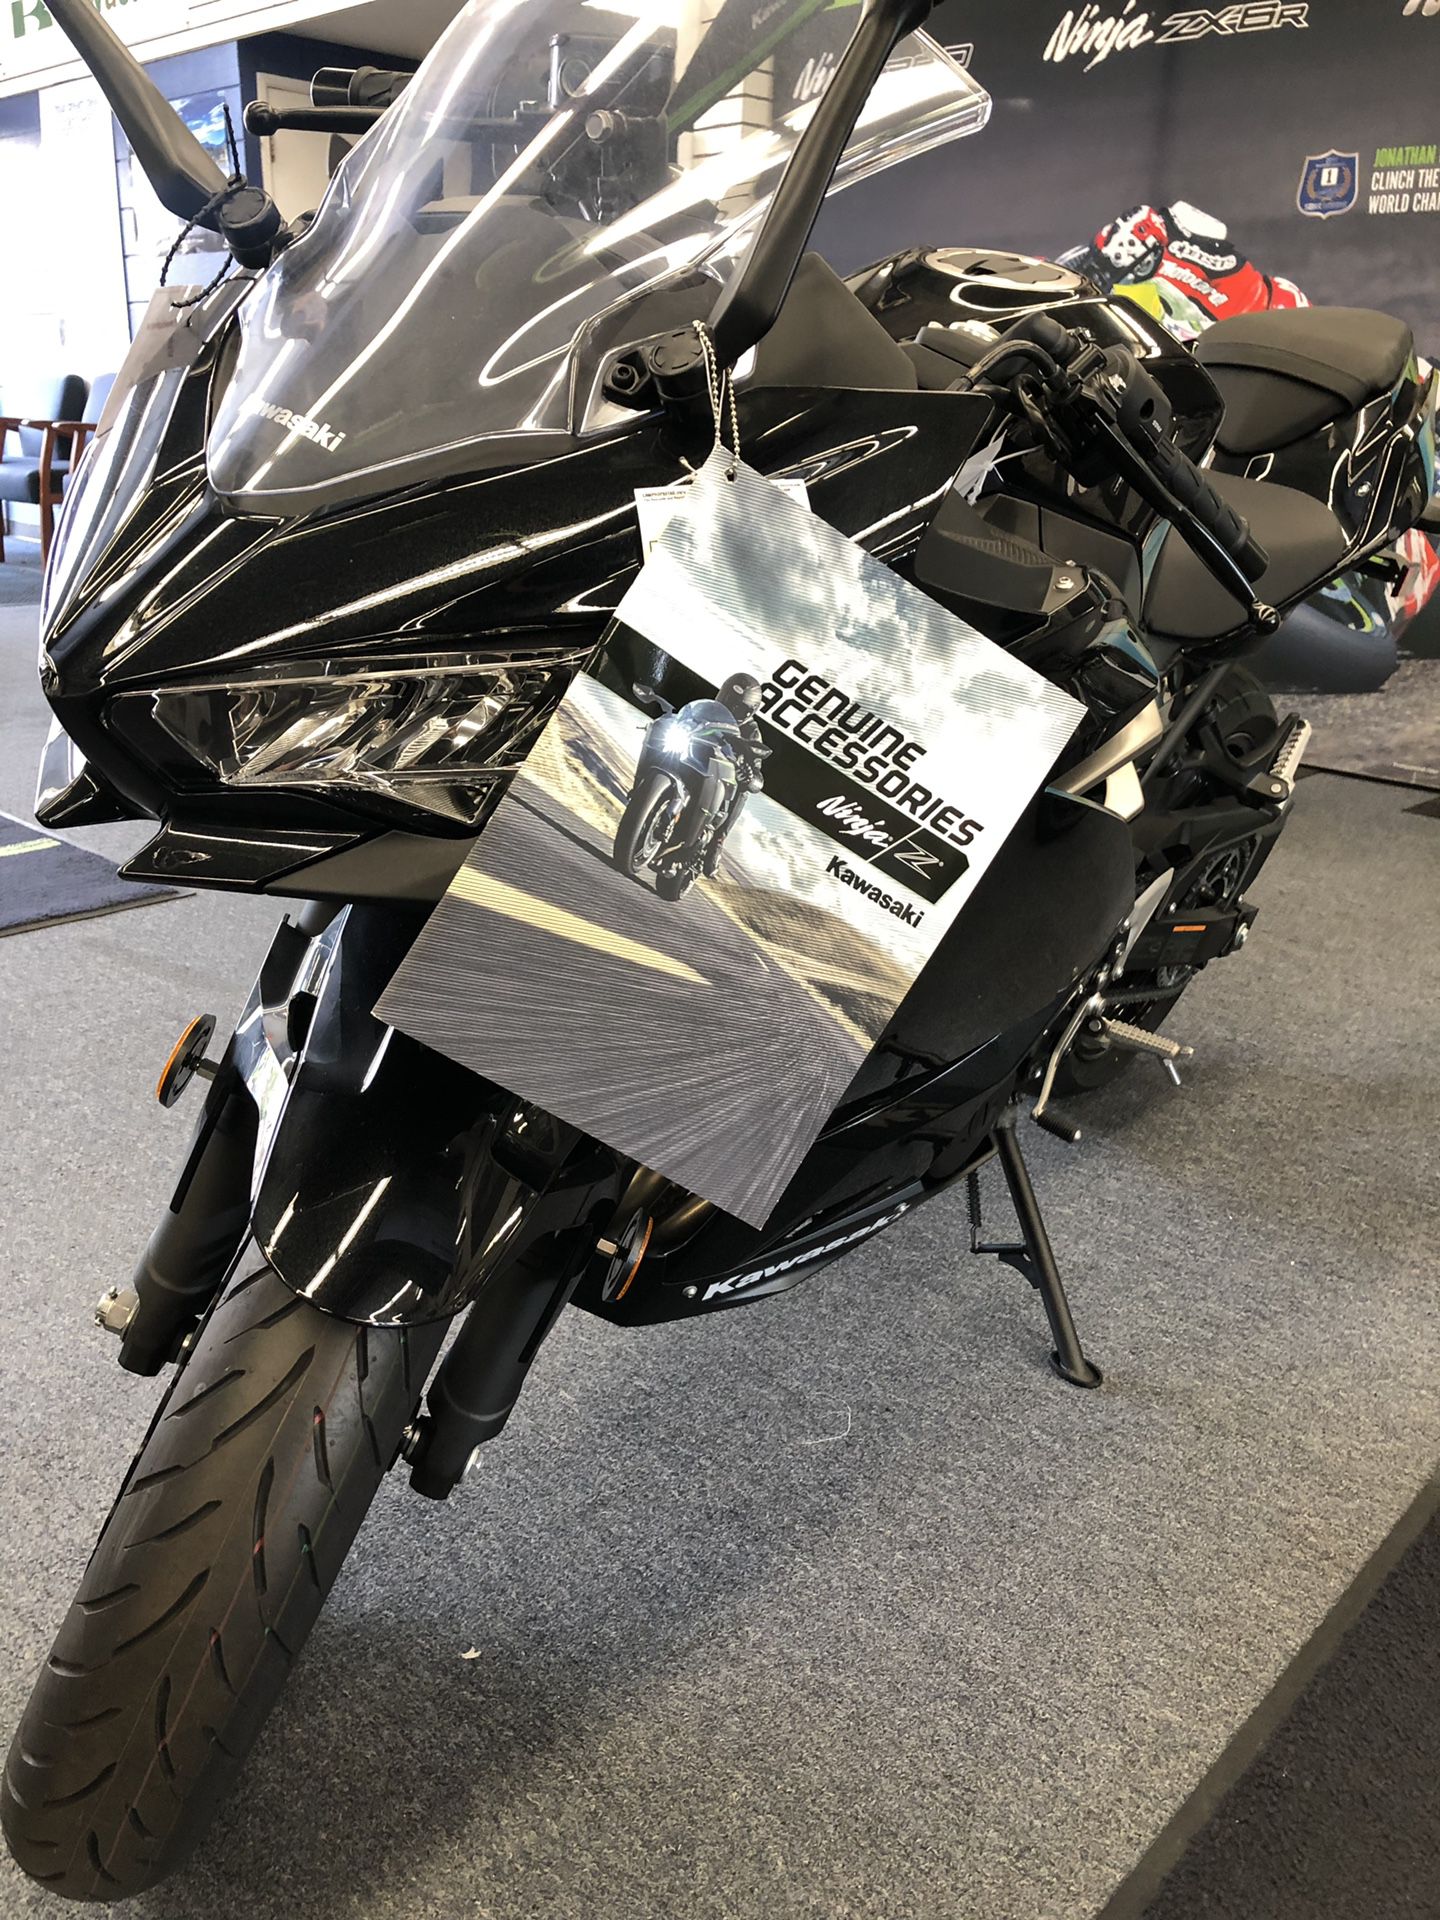 2019 Kawasaki Ninja 400 - $5,999 Out the door